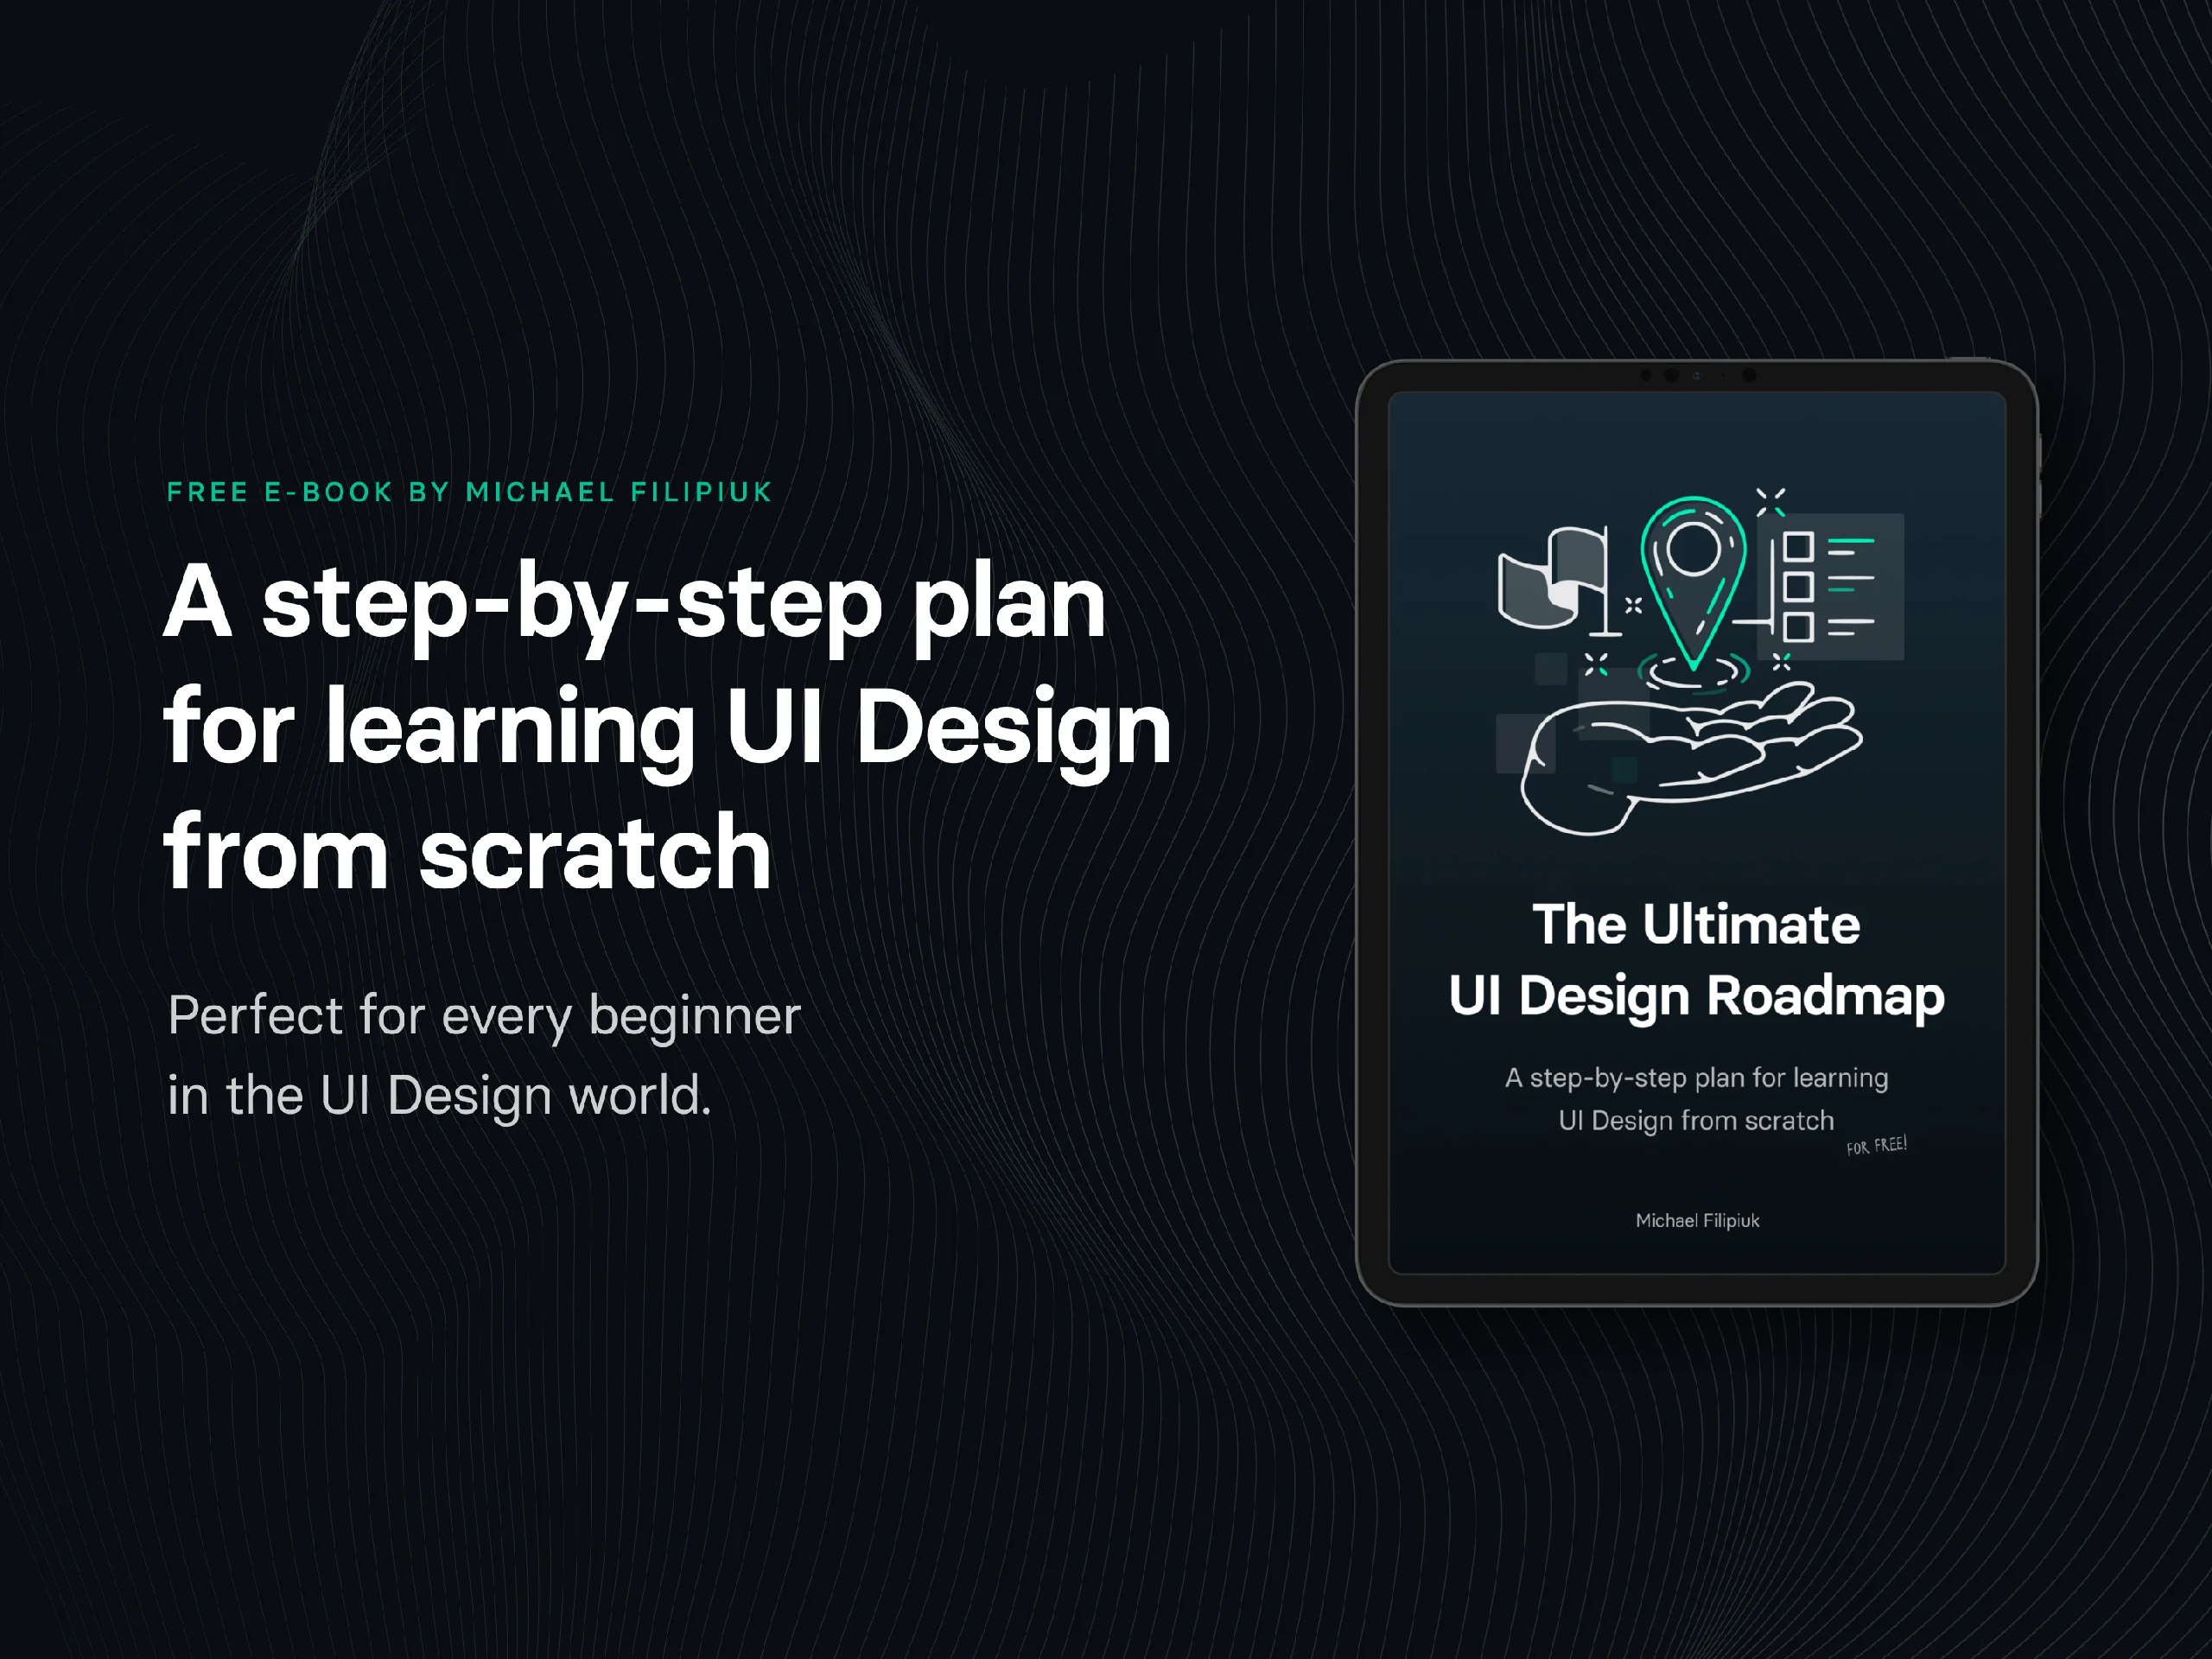 The Ultimate UI Design Roadmap